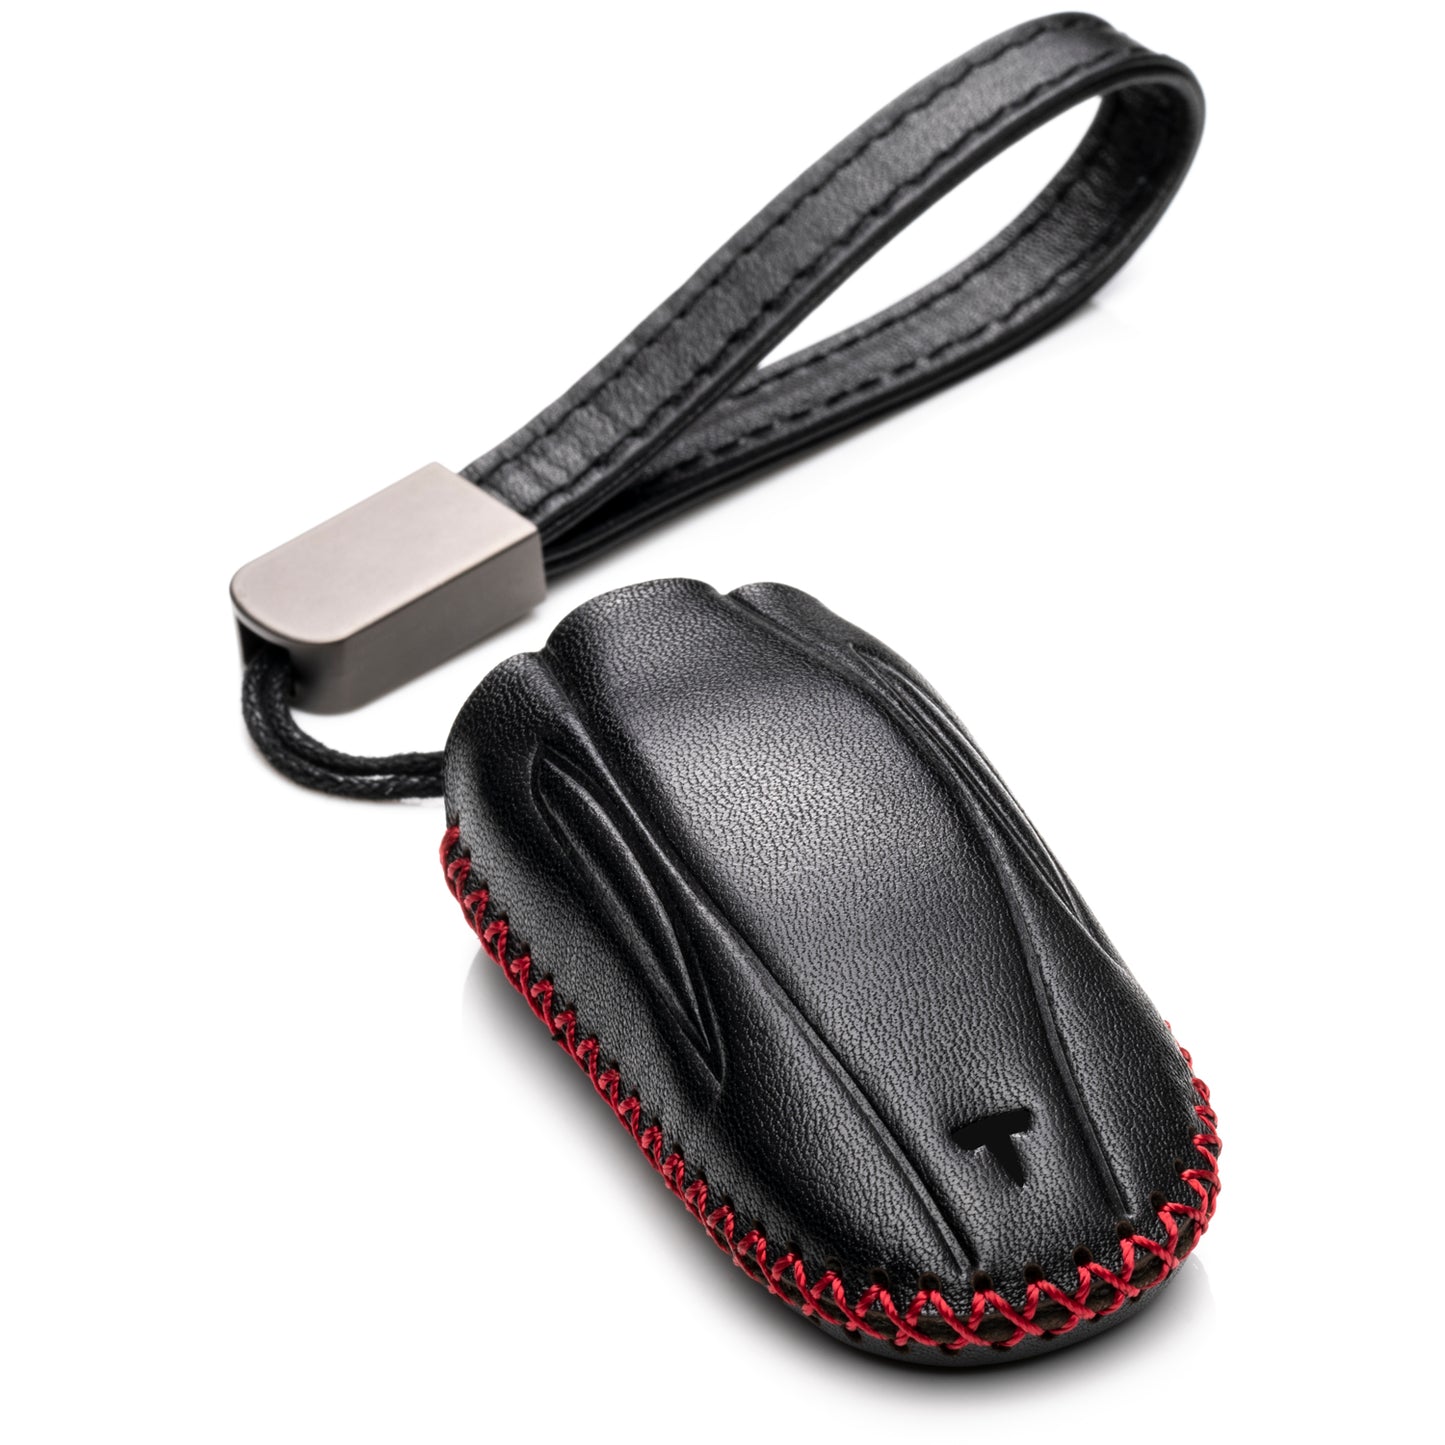 Vitodeco Genuine Leather Smart Key Fob Compatible for Tesla Model X